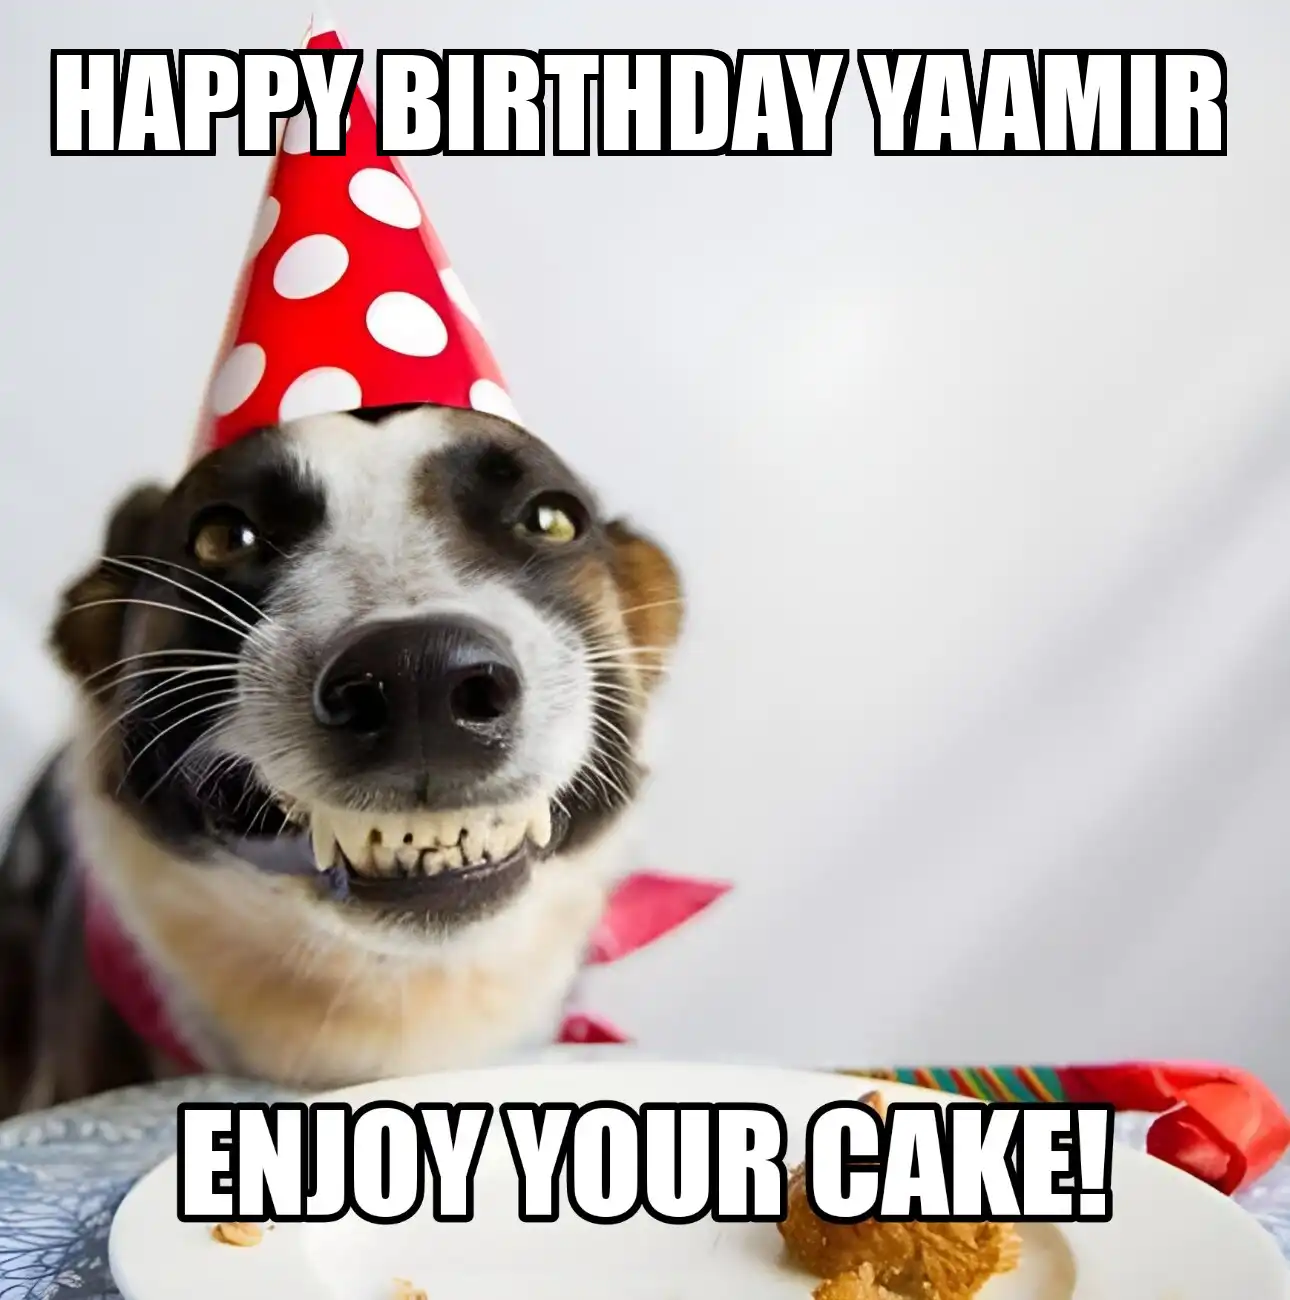 Happy Birthday Yaamir Enjoy Your Cake Dog Meme